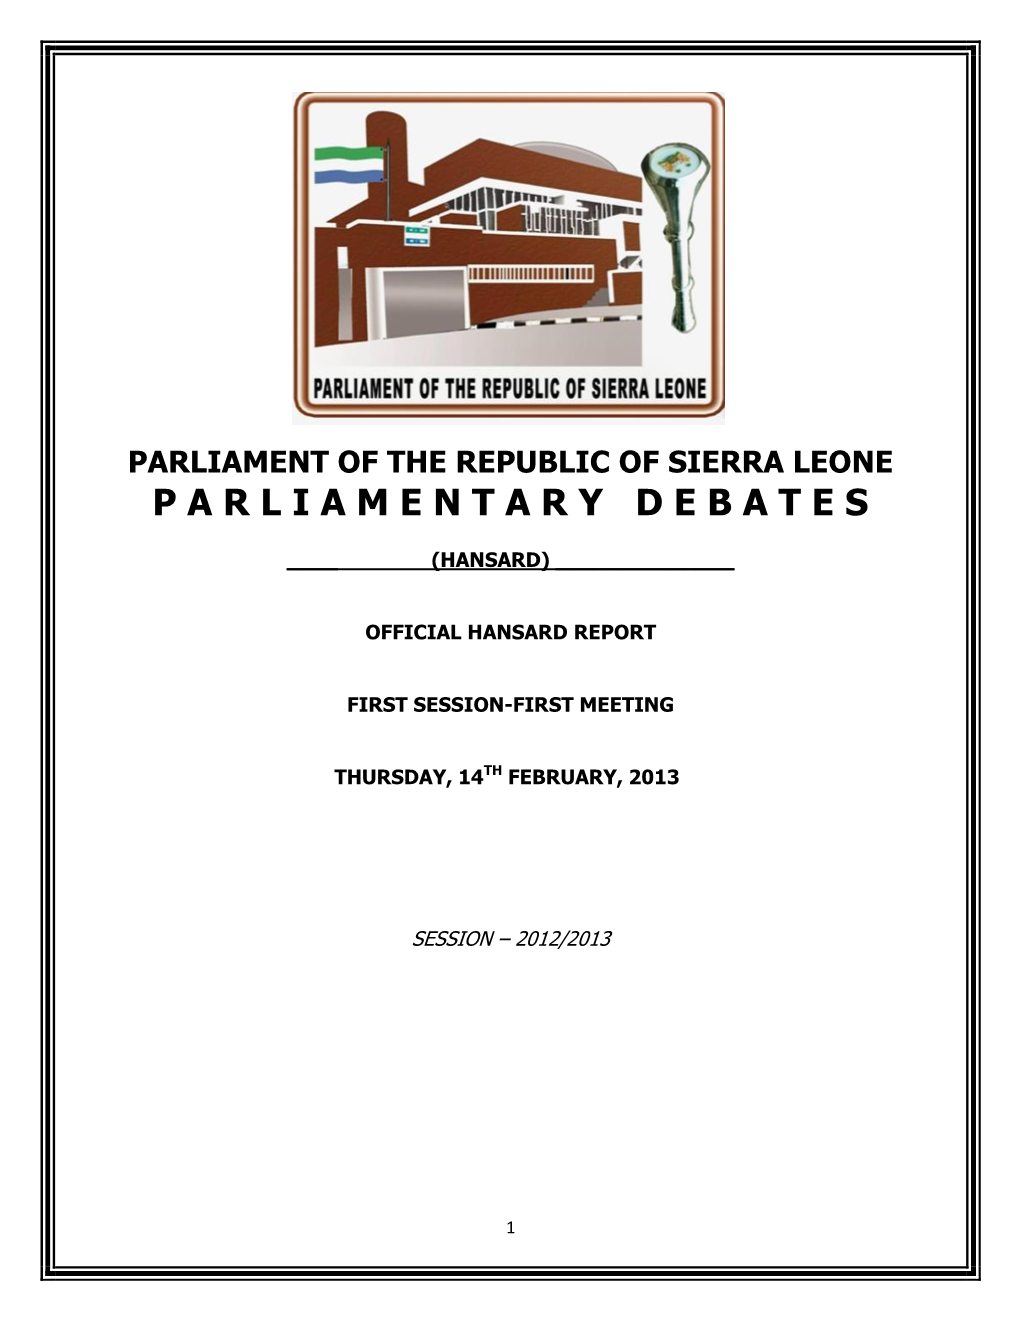 Parliament of the Republic of Sierra Leone Parliamentarydebates